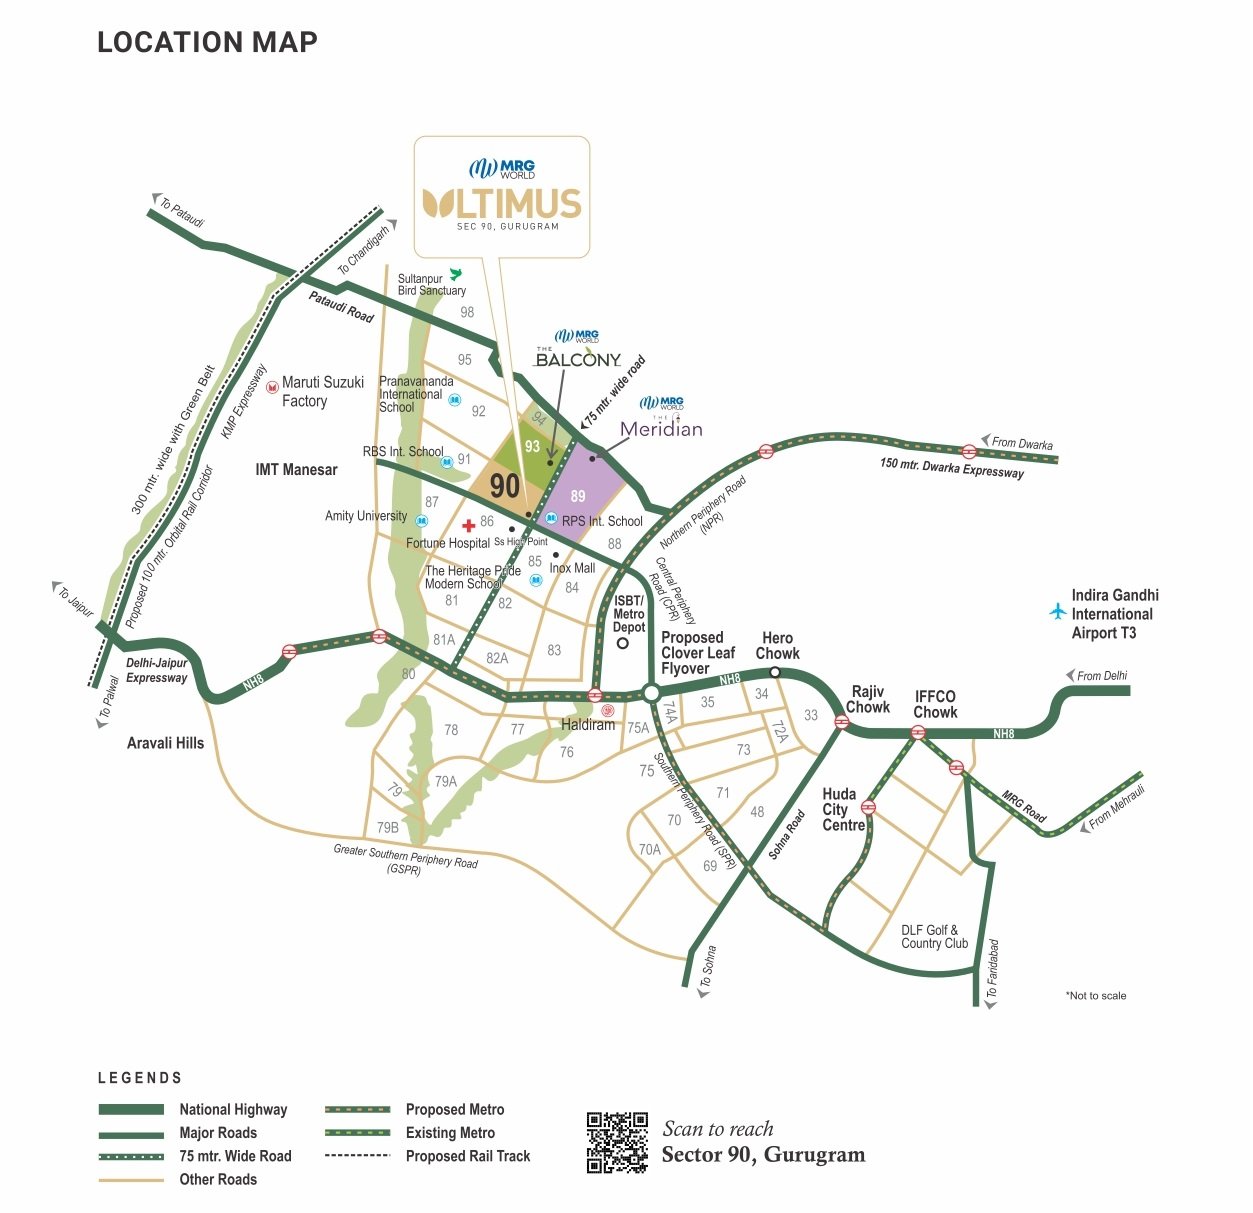 Mrg-World-Ultimus-Gurgaon-Location-Map